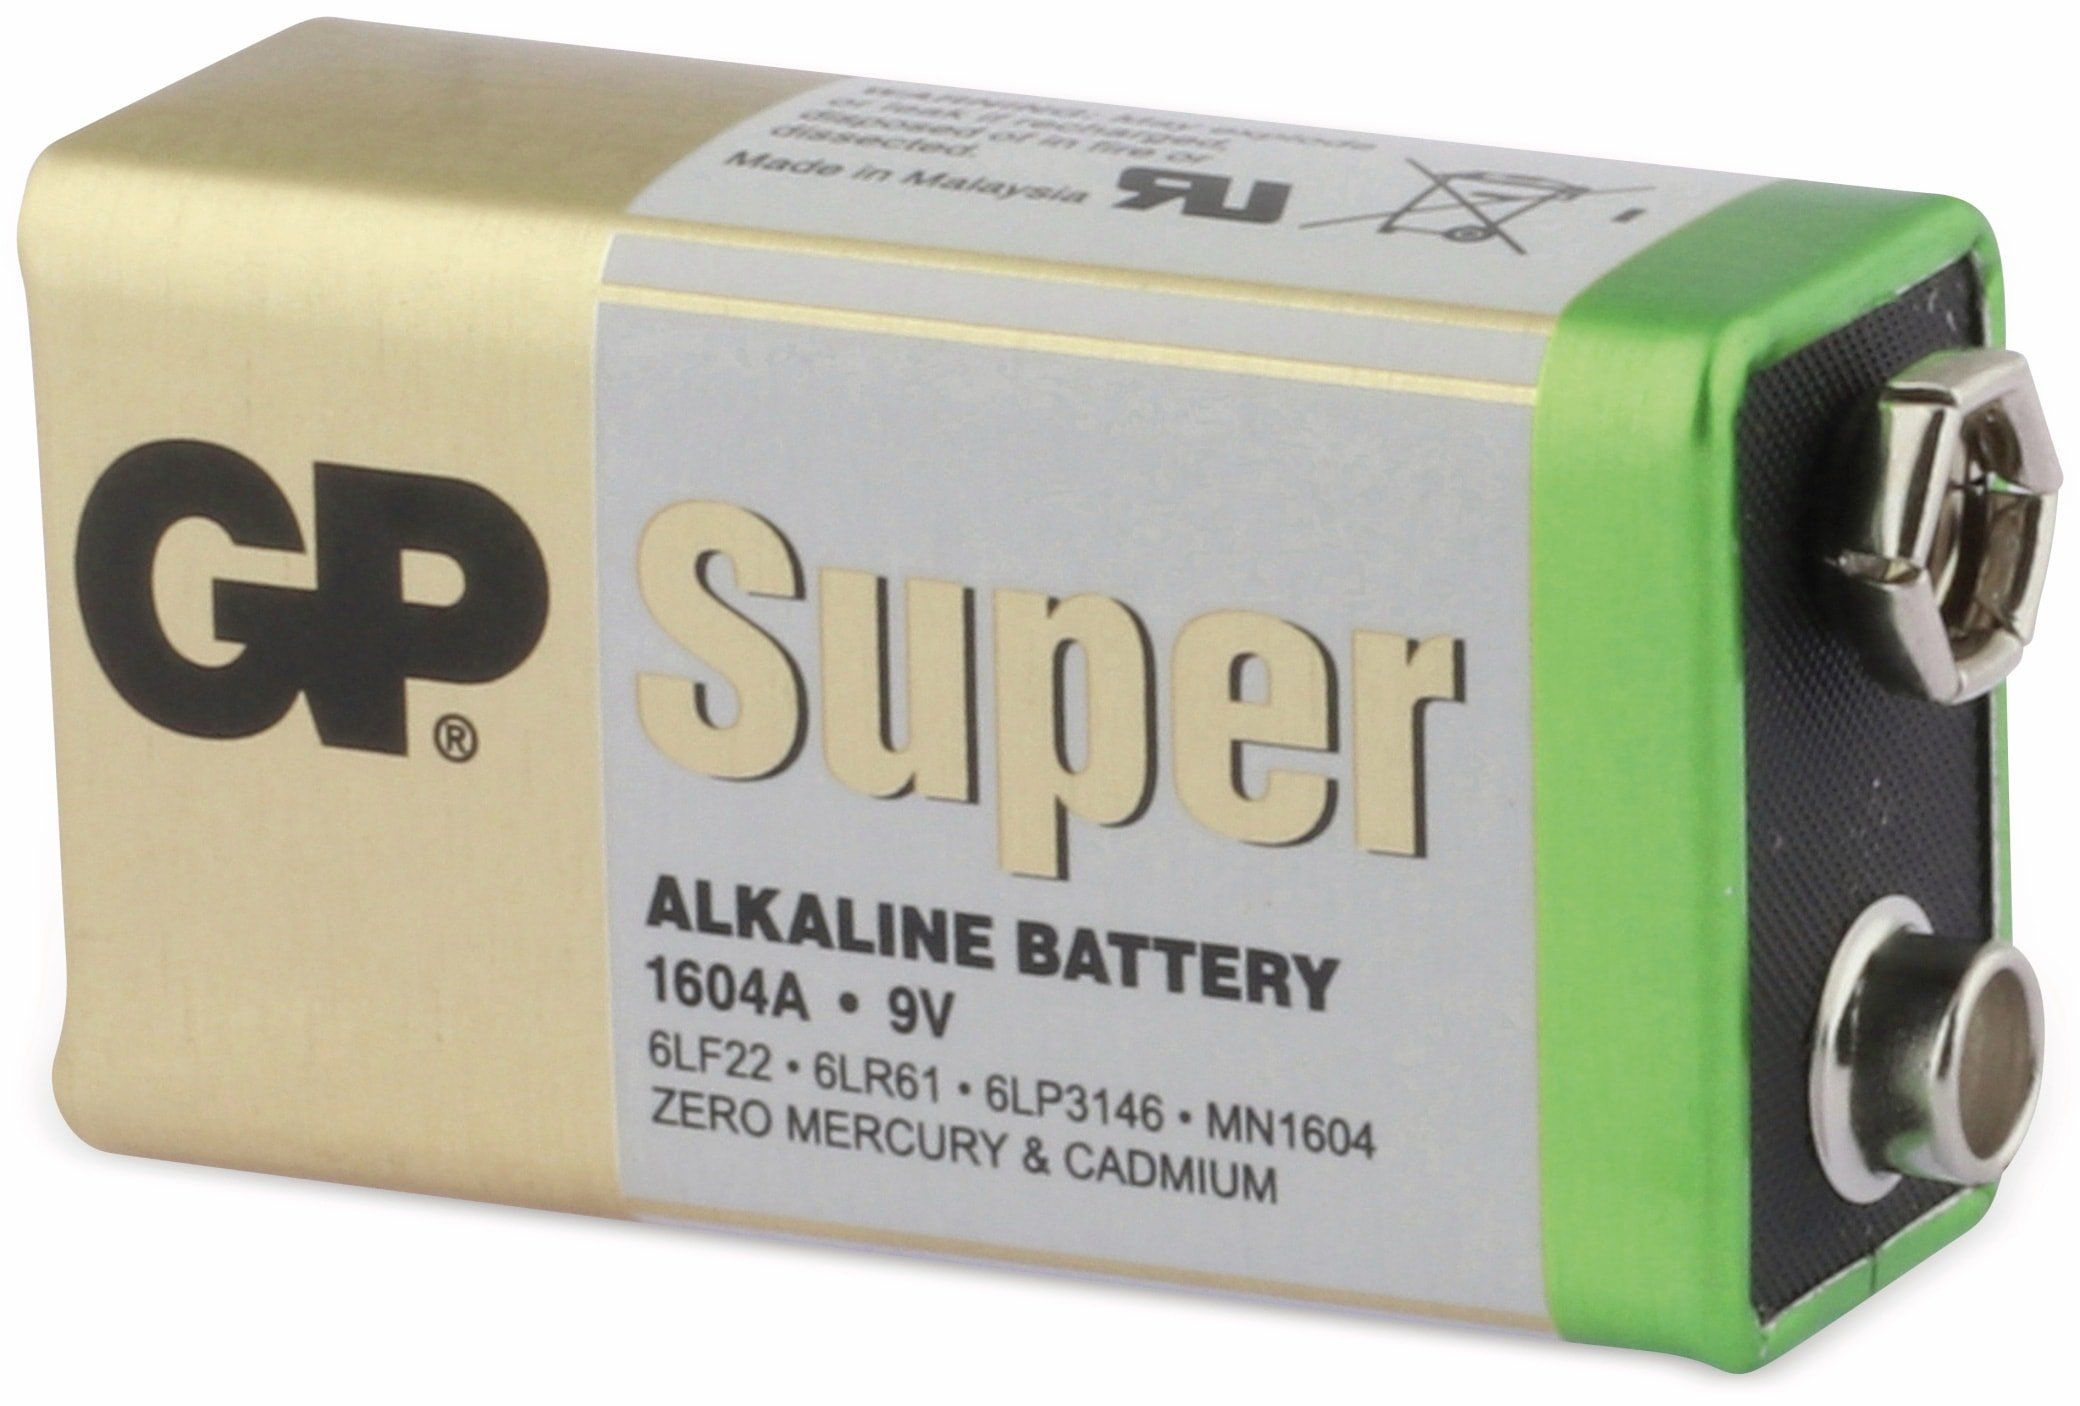 GP 9V-Block-Batterie-Set SUPER Alkaline Stück Batterieset 10 Alkaline